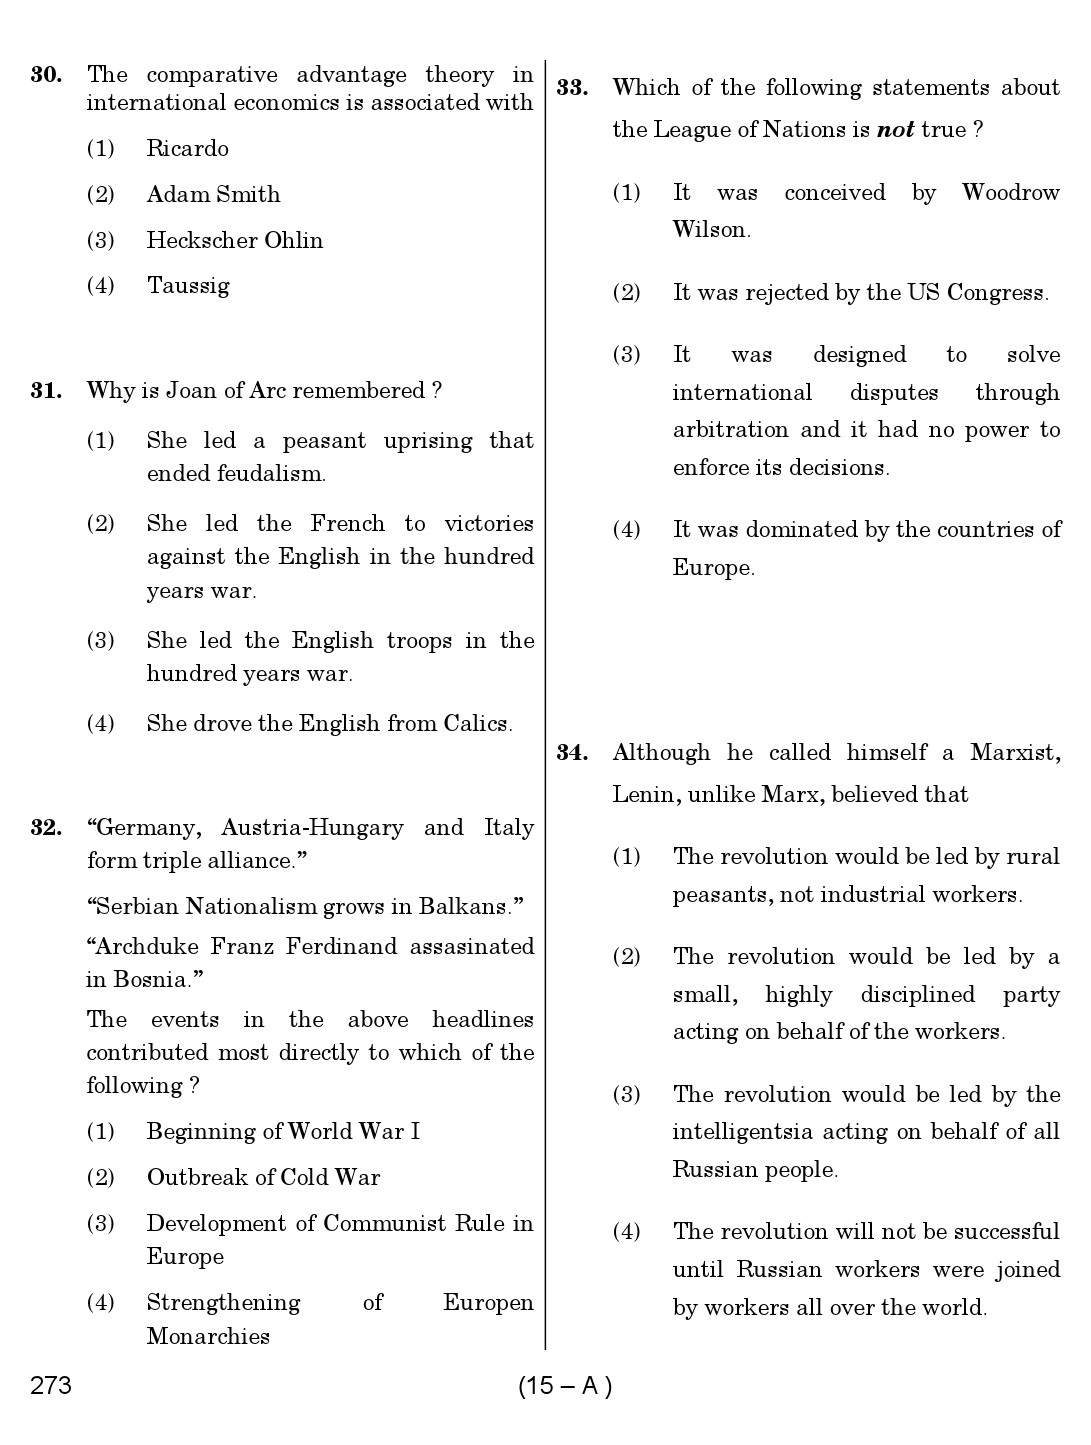 Karnataka PSC Social Science Teacher Exam Sample Question Paper Subject code 273 15